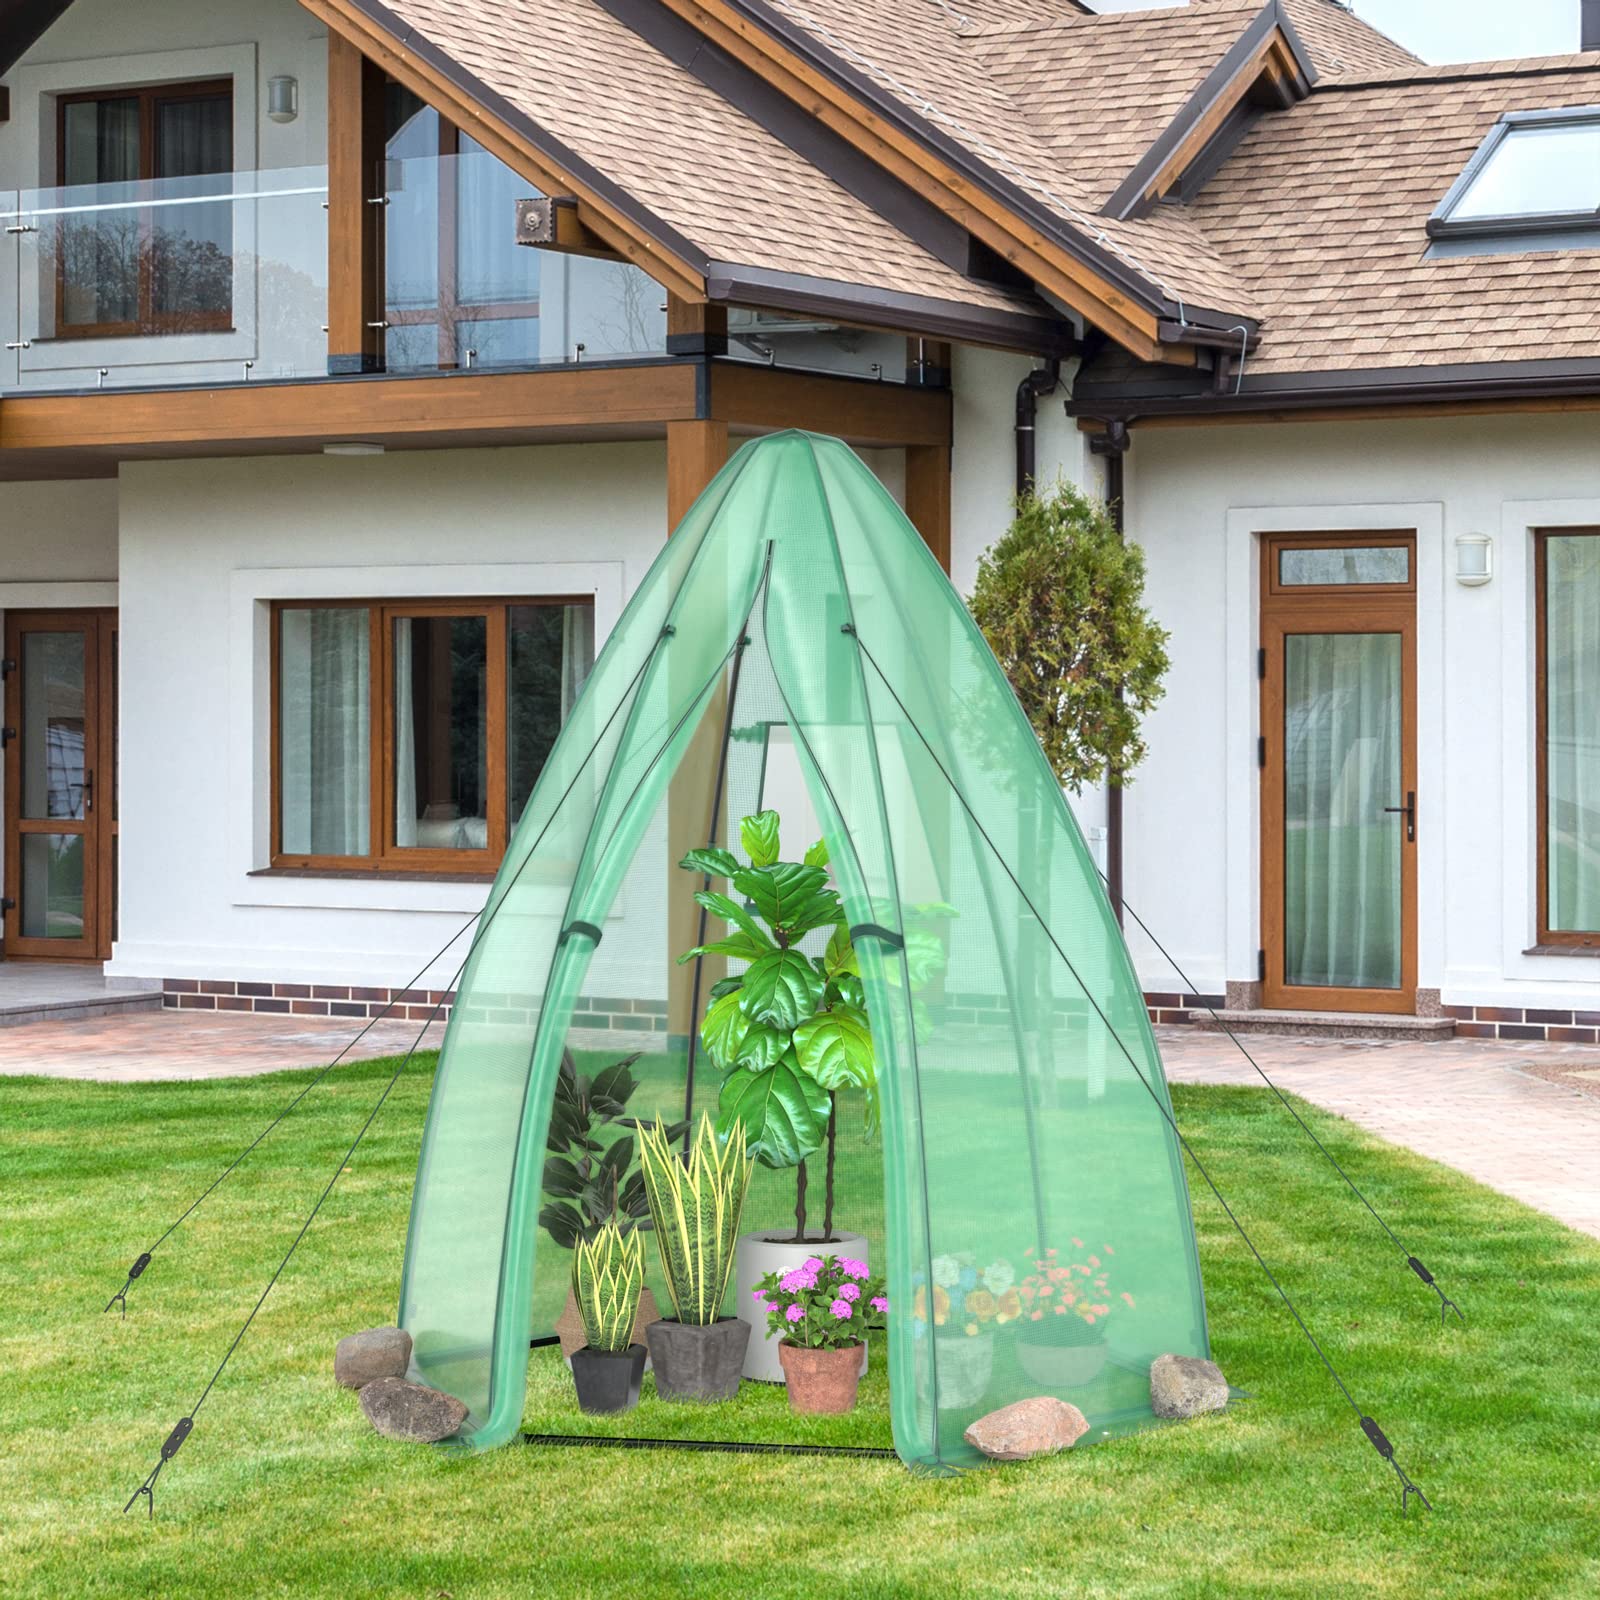 Giantex Portable Walk-in Greenhouse - 5.5’x5.5’x6’ PE Cover, Roll-up Zippered Door, Window